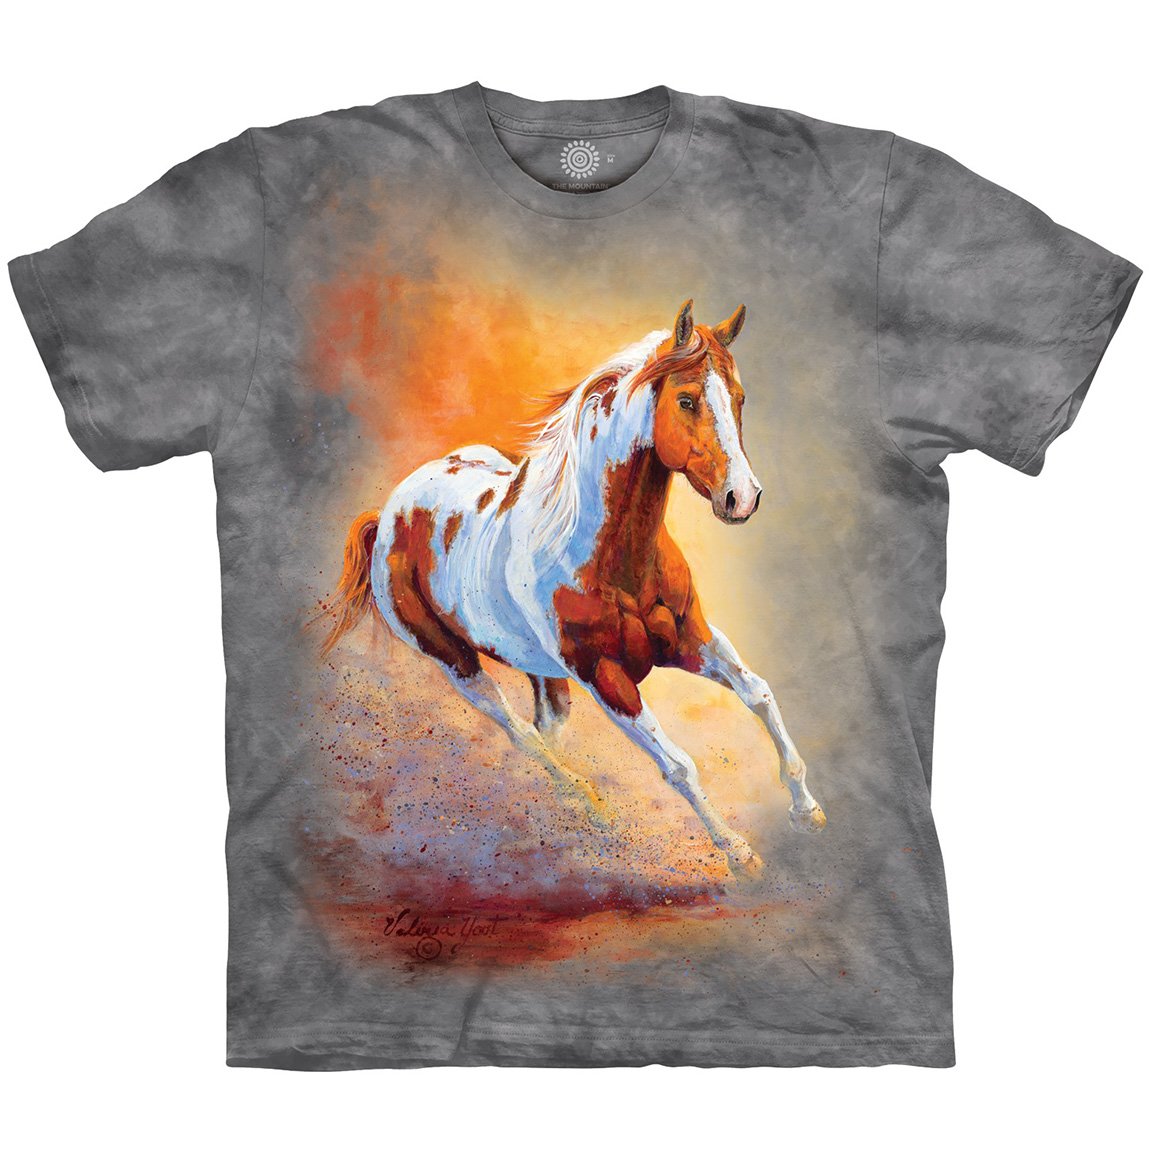 The Mountain Sunset Gallop - Kids' Unisex T-Shirt